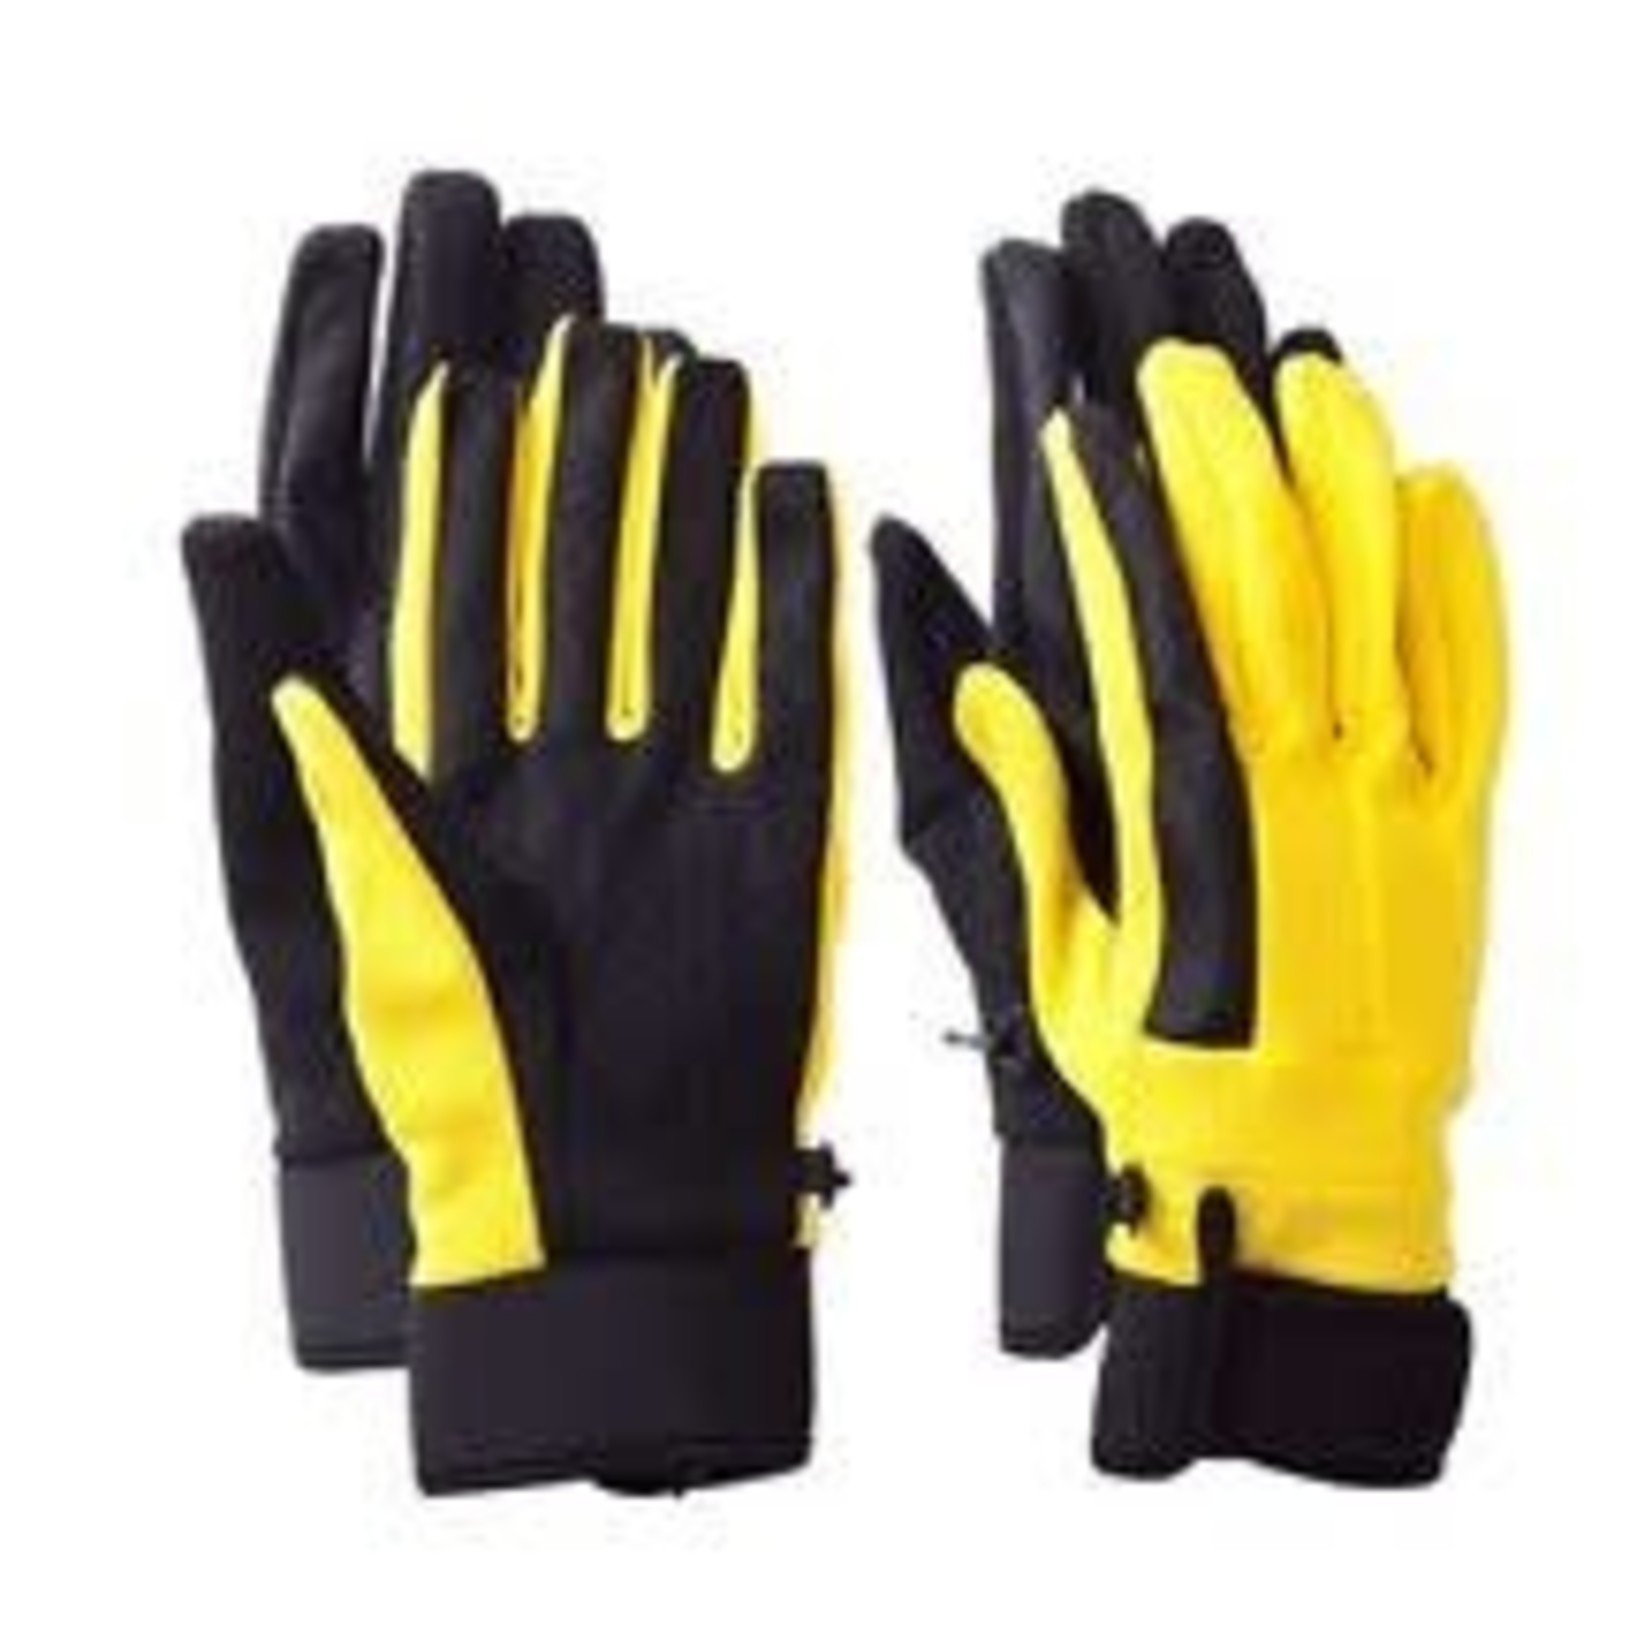 Analog Analog Corral Gloves 2 pk - Corp Yellow / True Black M